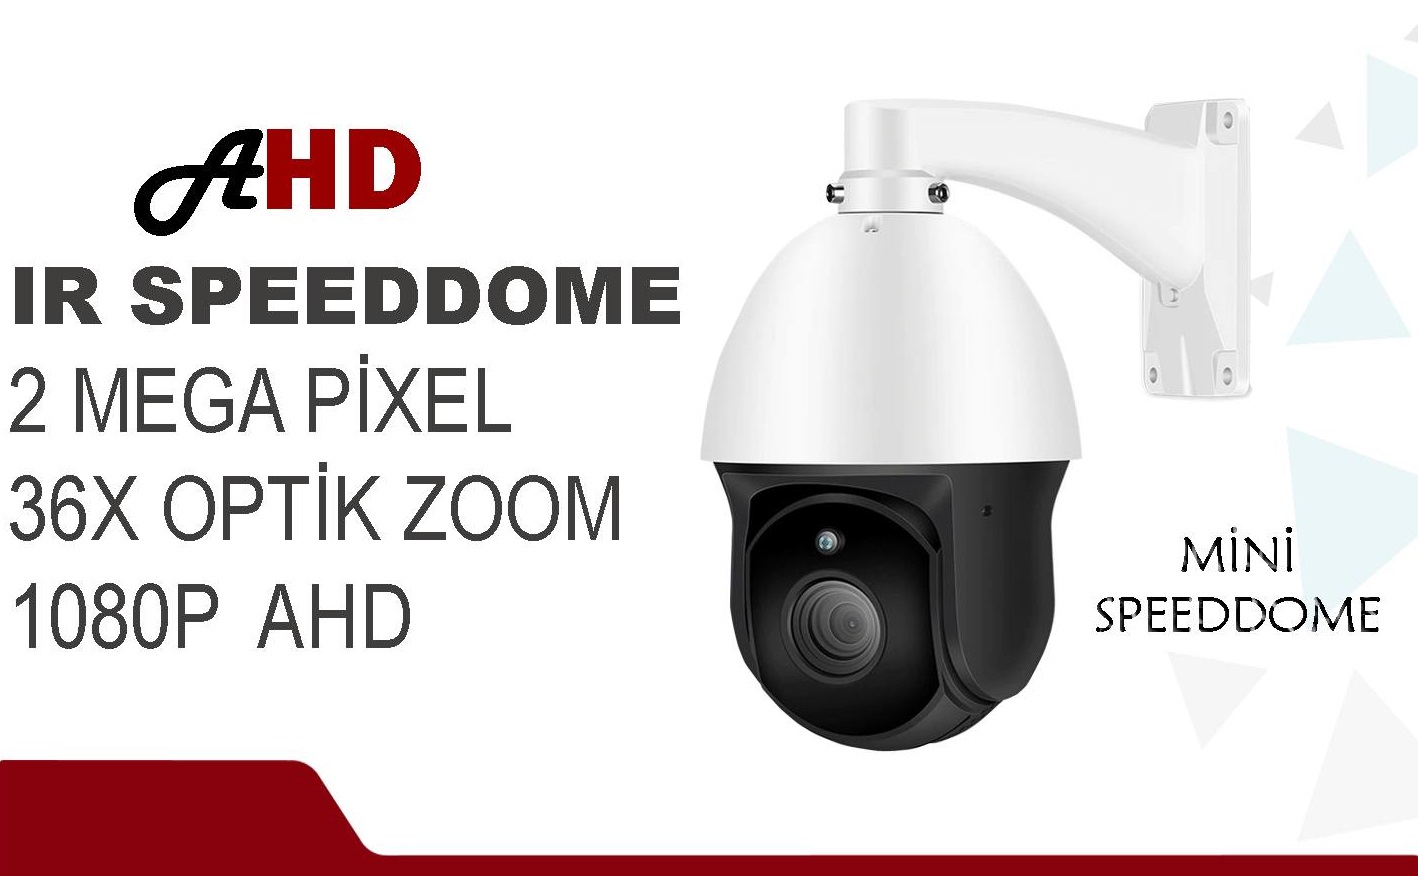 RK-4003  2MP  AHD Speeddome  36x Kamera Optik Zoom 